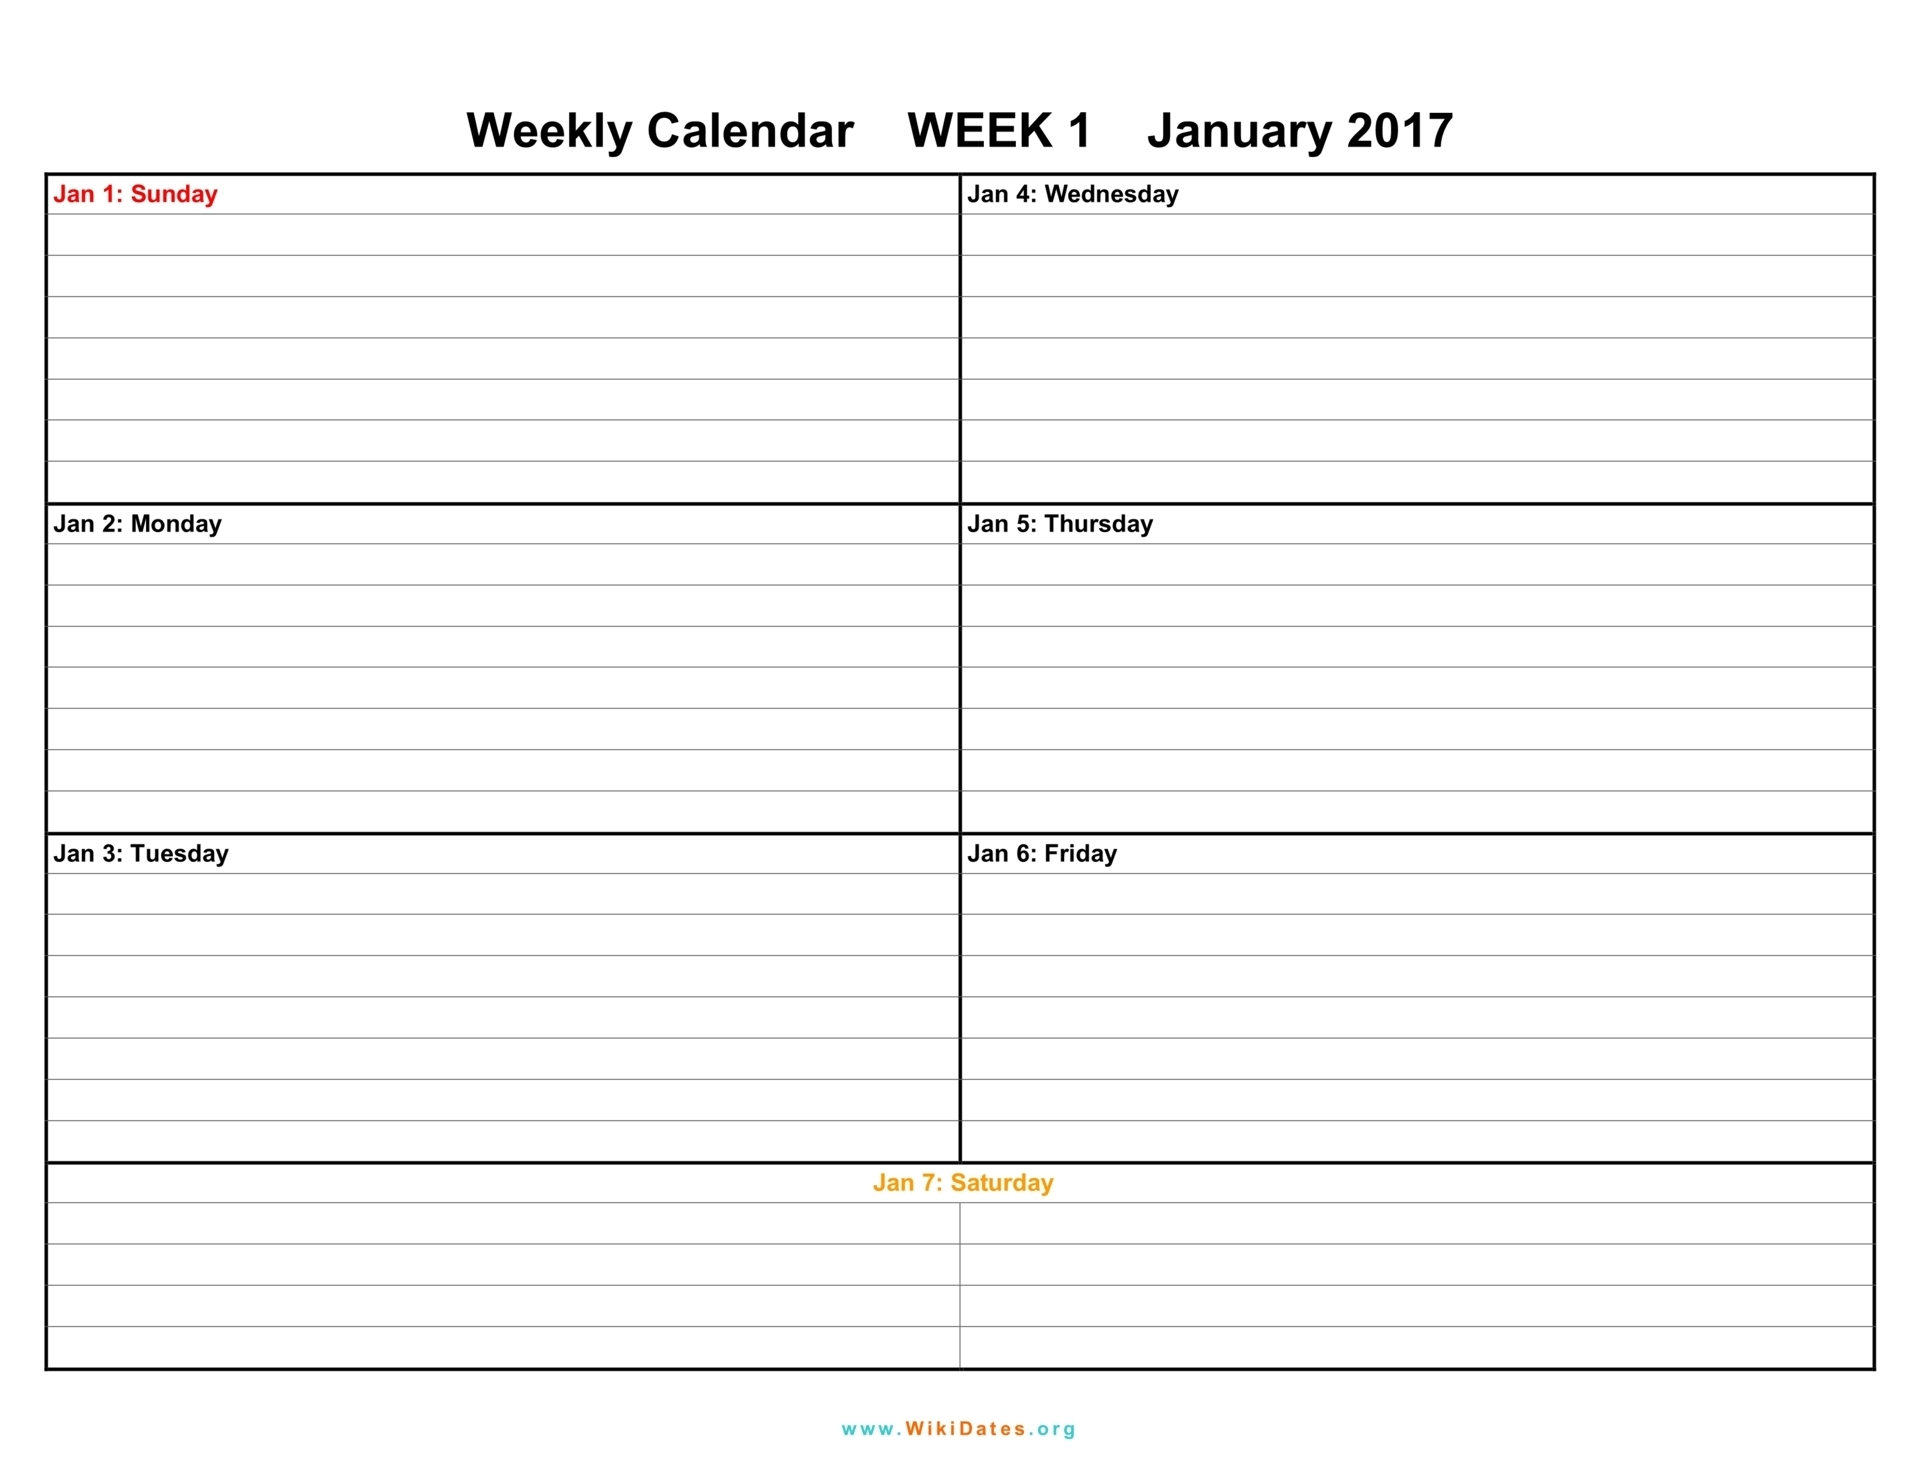 Printable Weekly Calendar With 15 Minute Time Slots